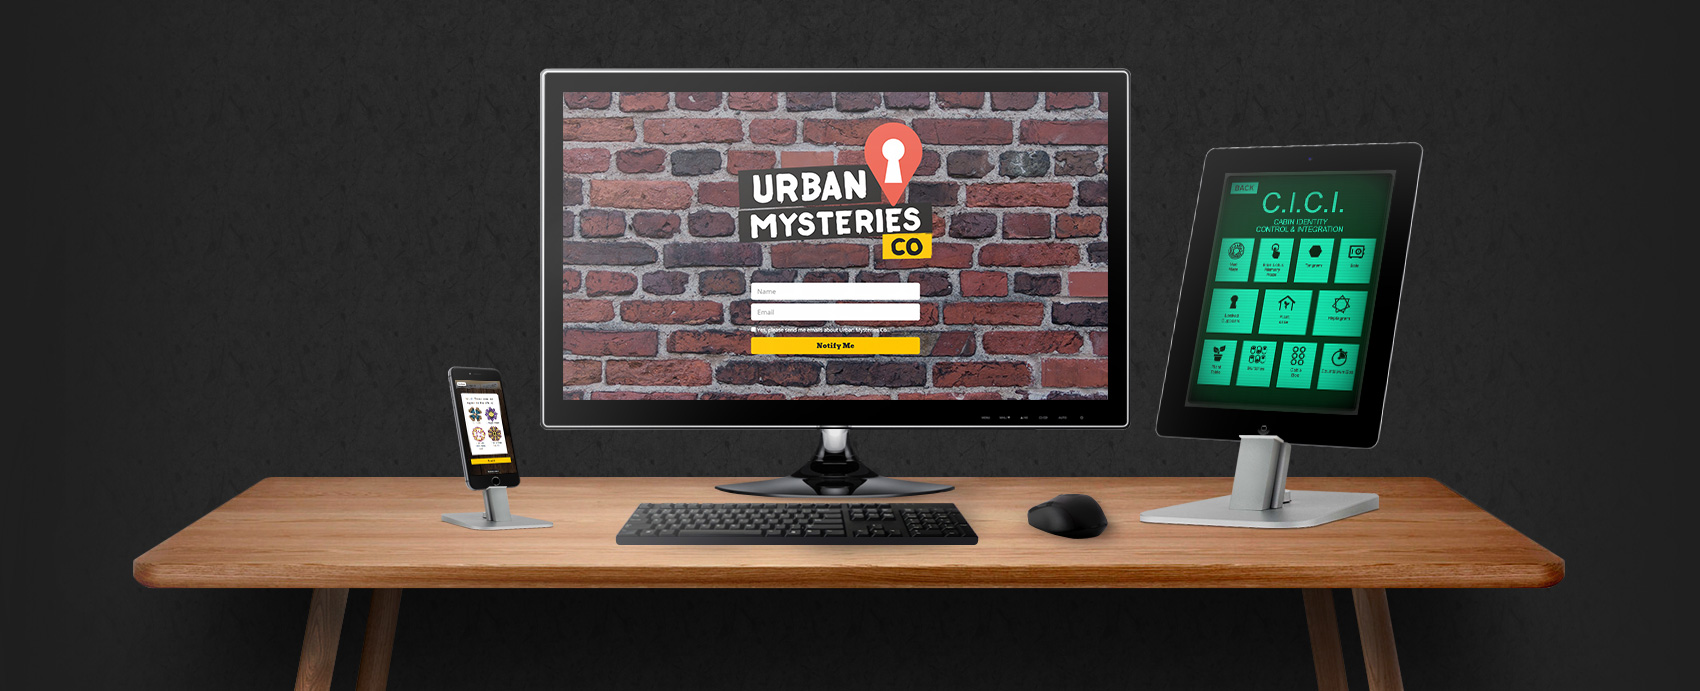 Urban Mysteries Co